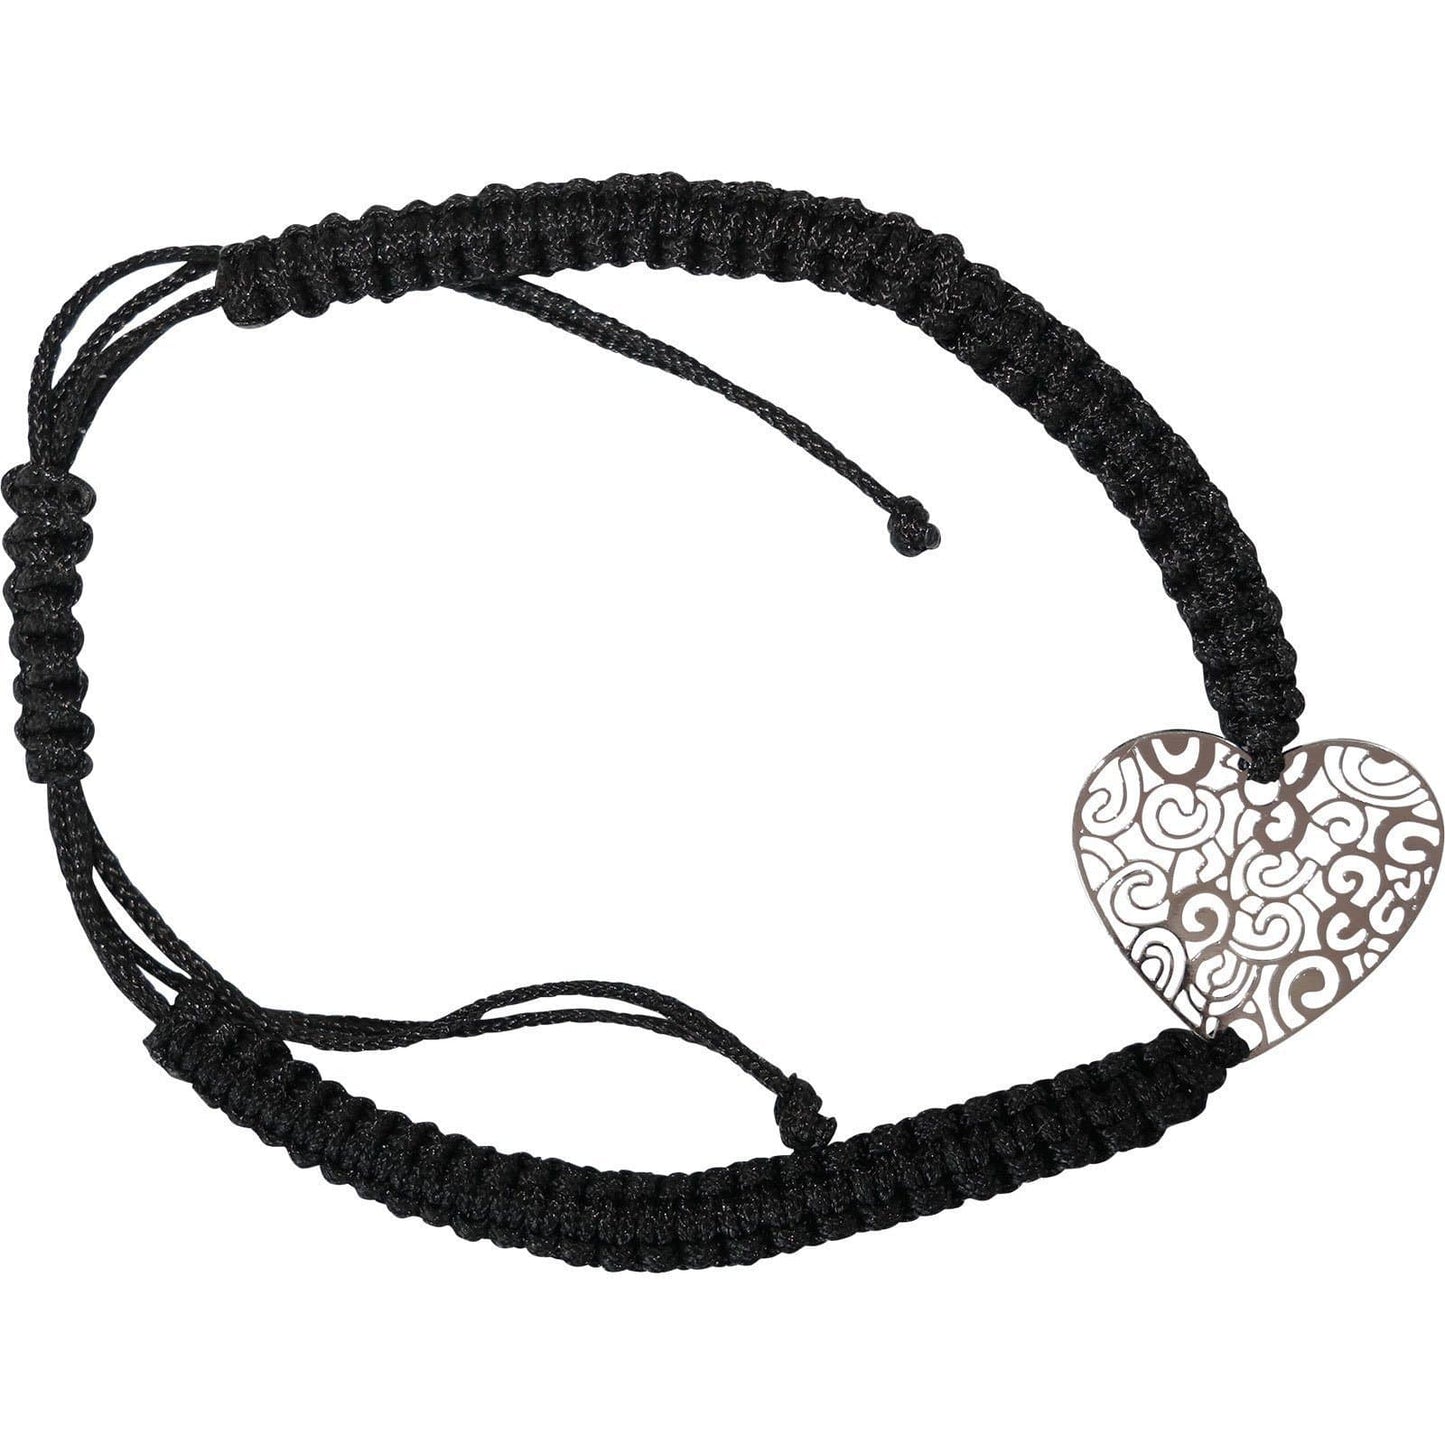 Silver Colour Heart Bracelet Black Wristband Bangle Womens Ladies Girl Jewellery